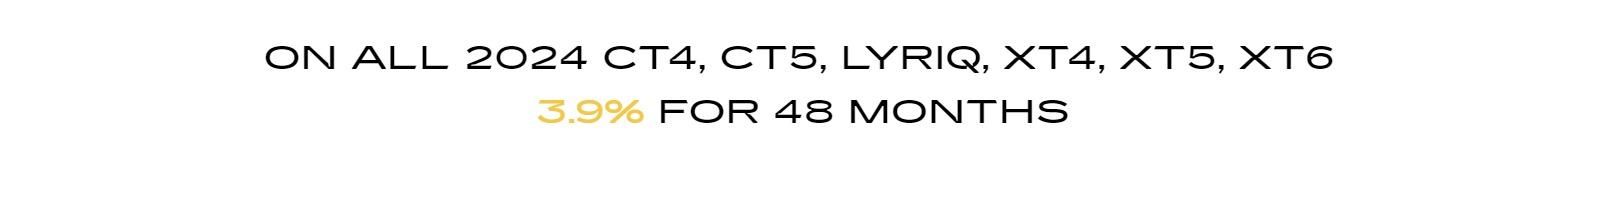 3.9% for 48 mos. on all 2024 CT4, CT5, LYRIQ, XT4, XT5, XT6.